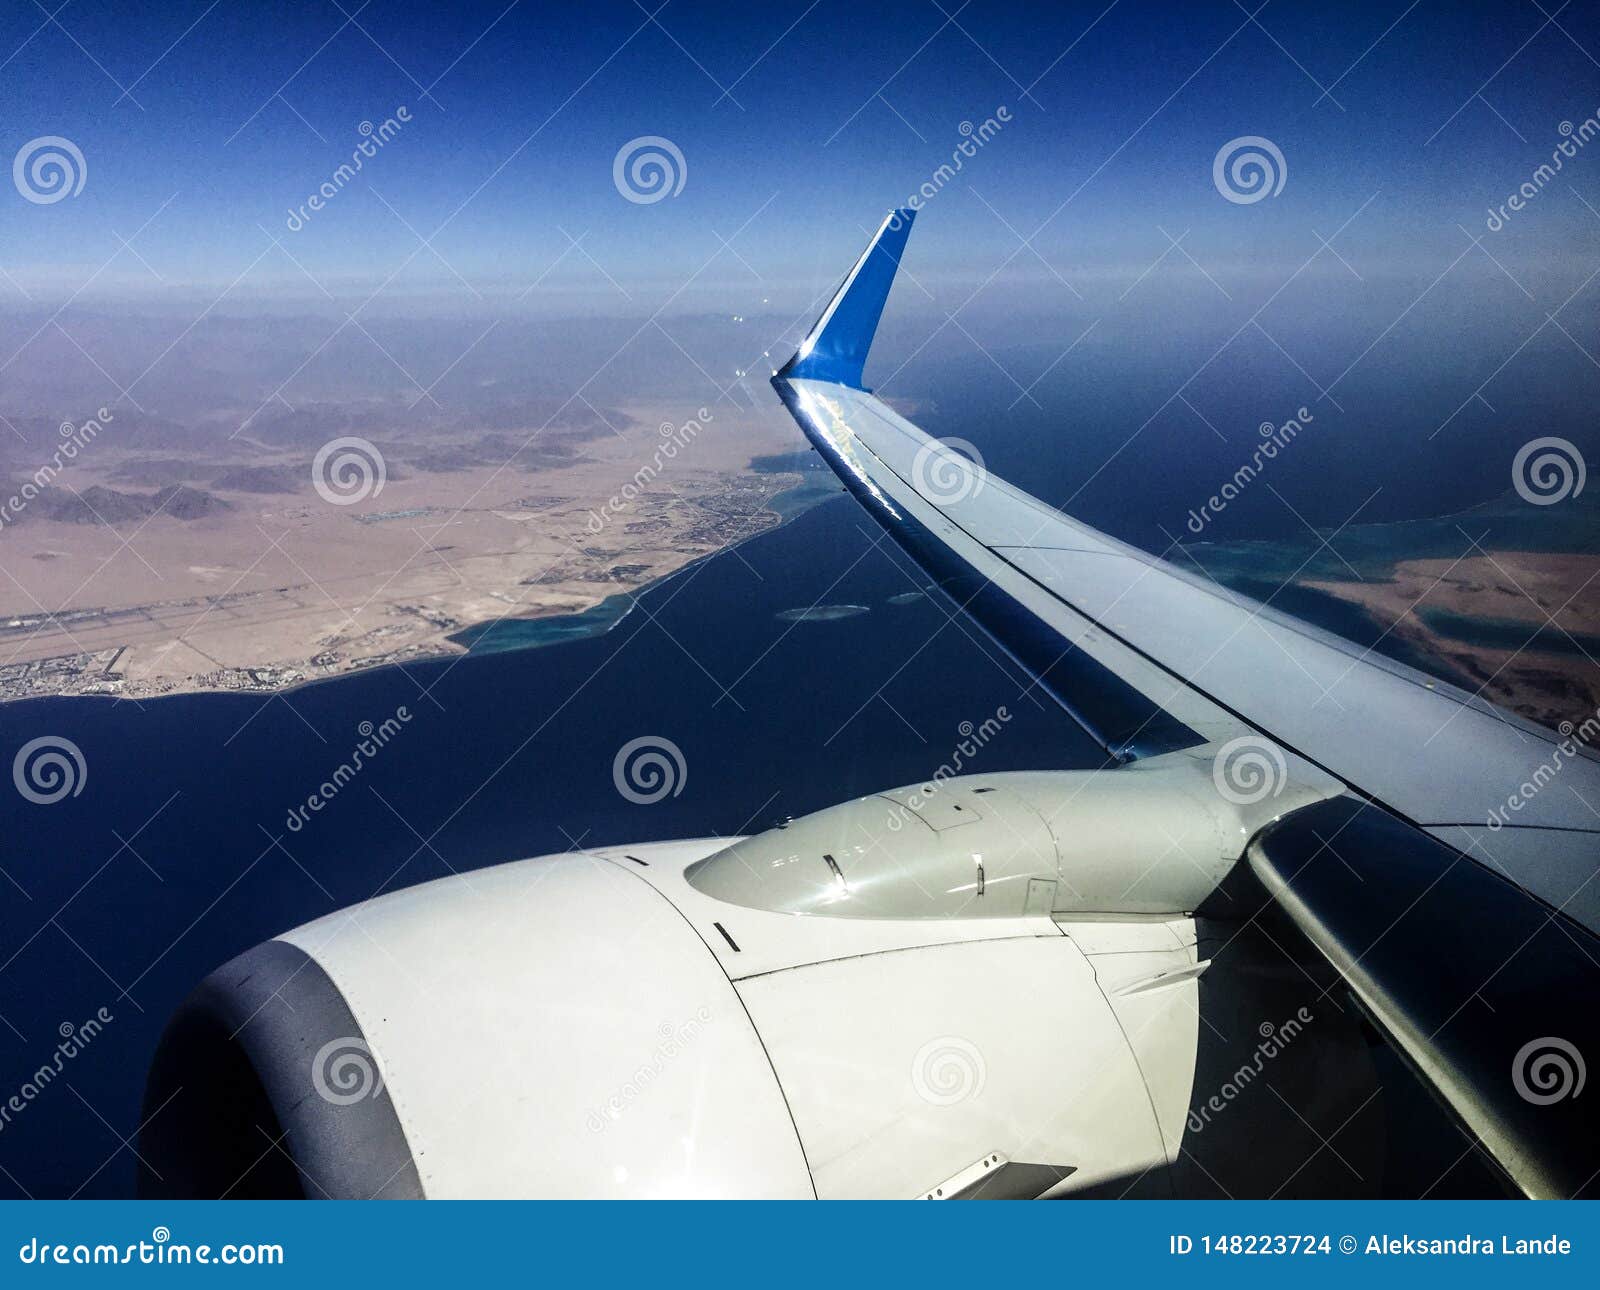 airplane above the desert sinay